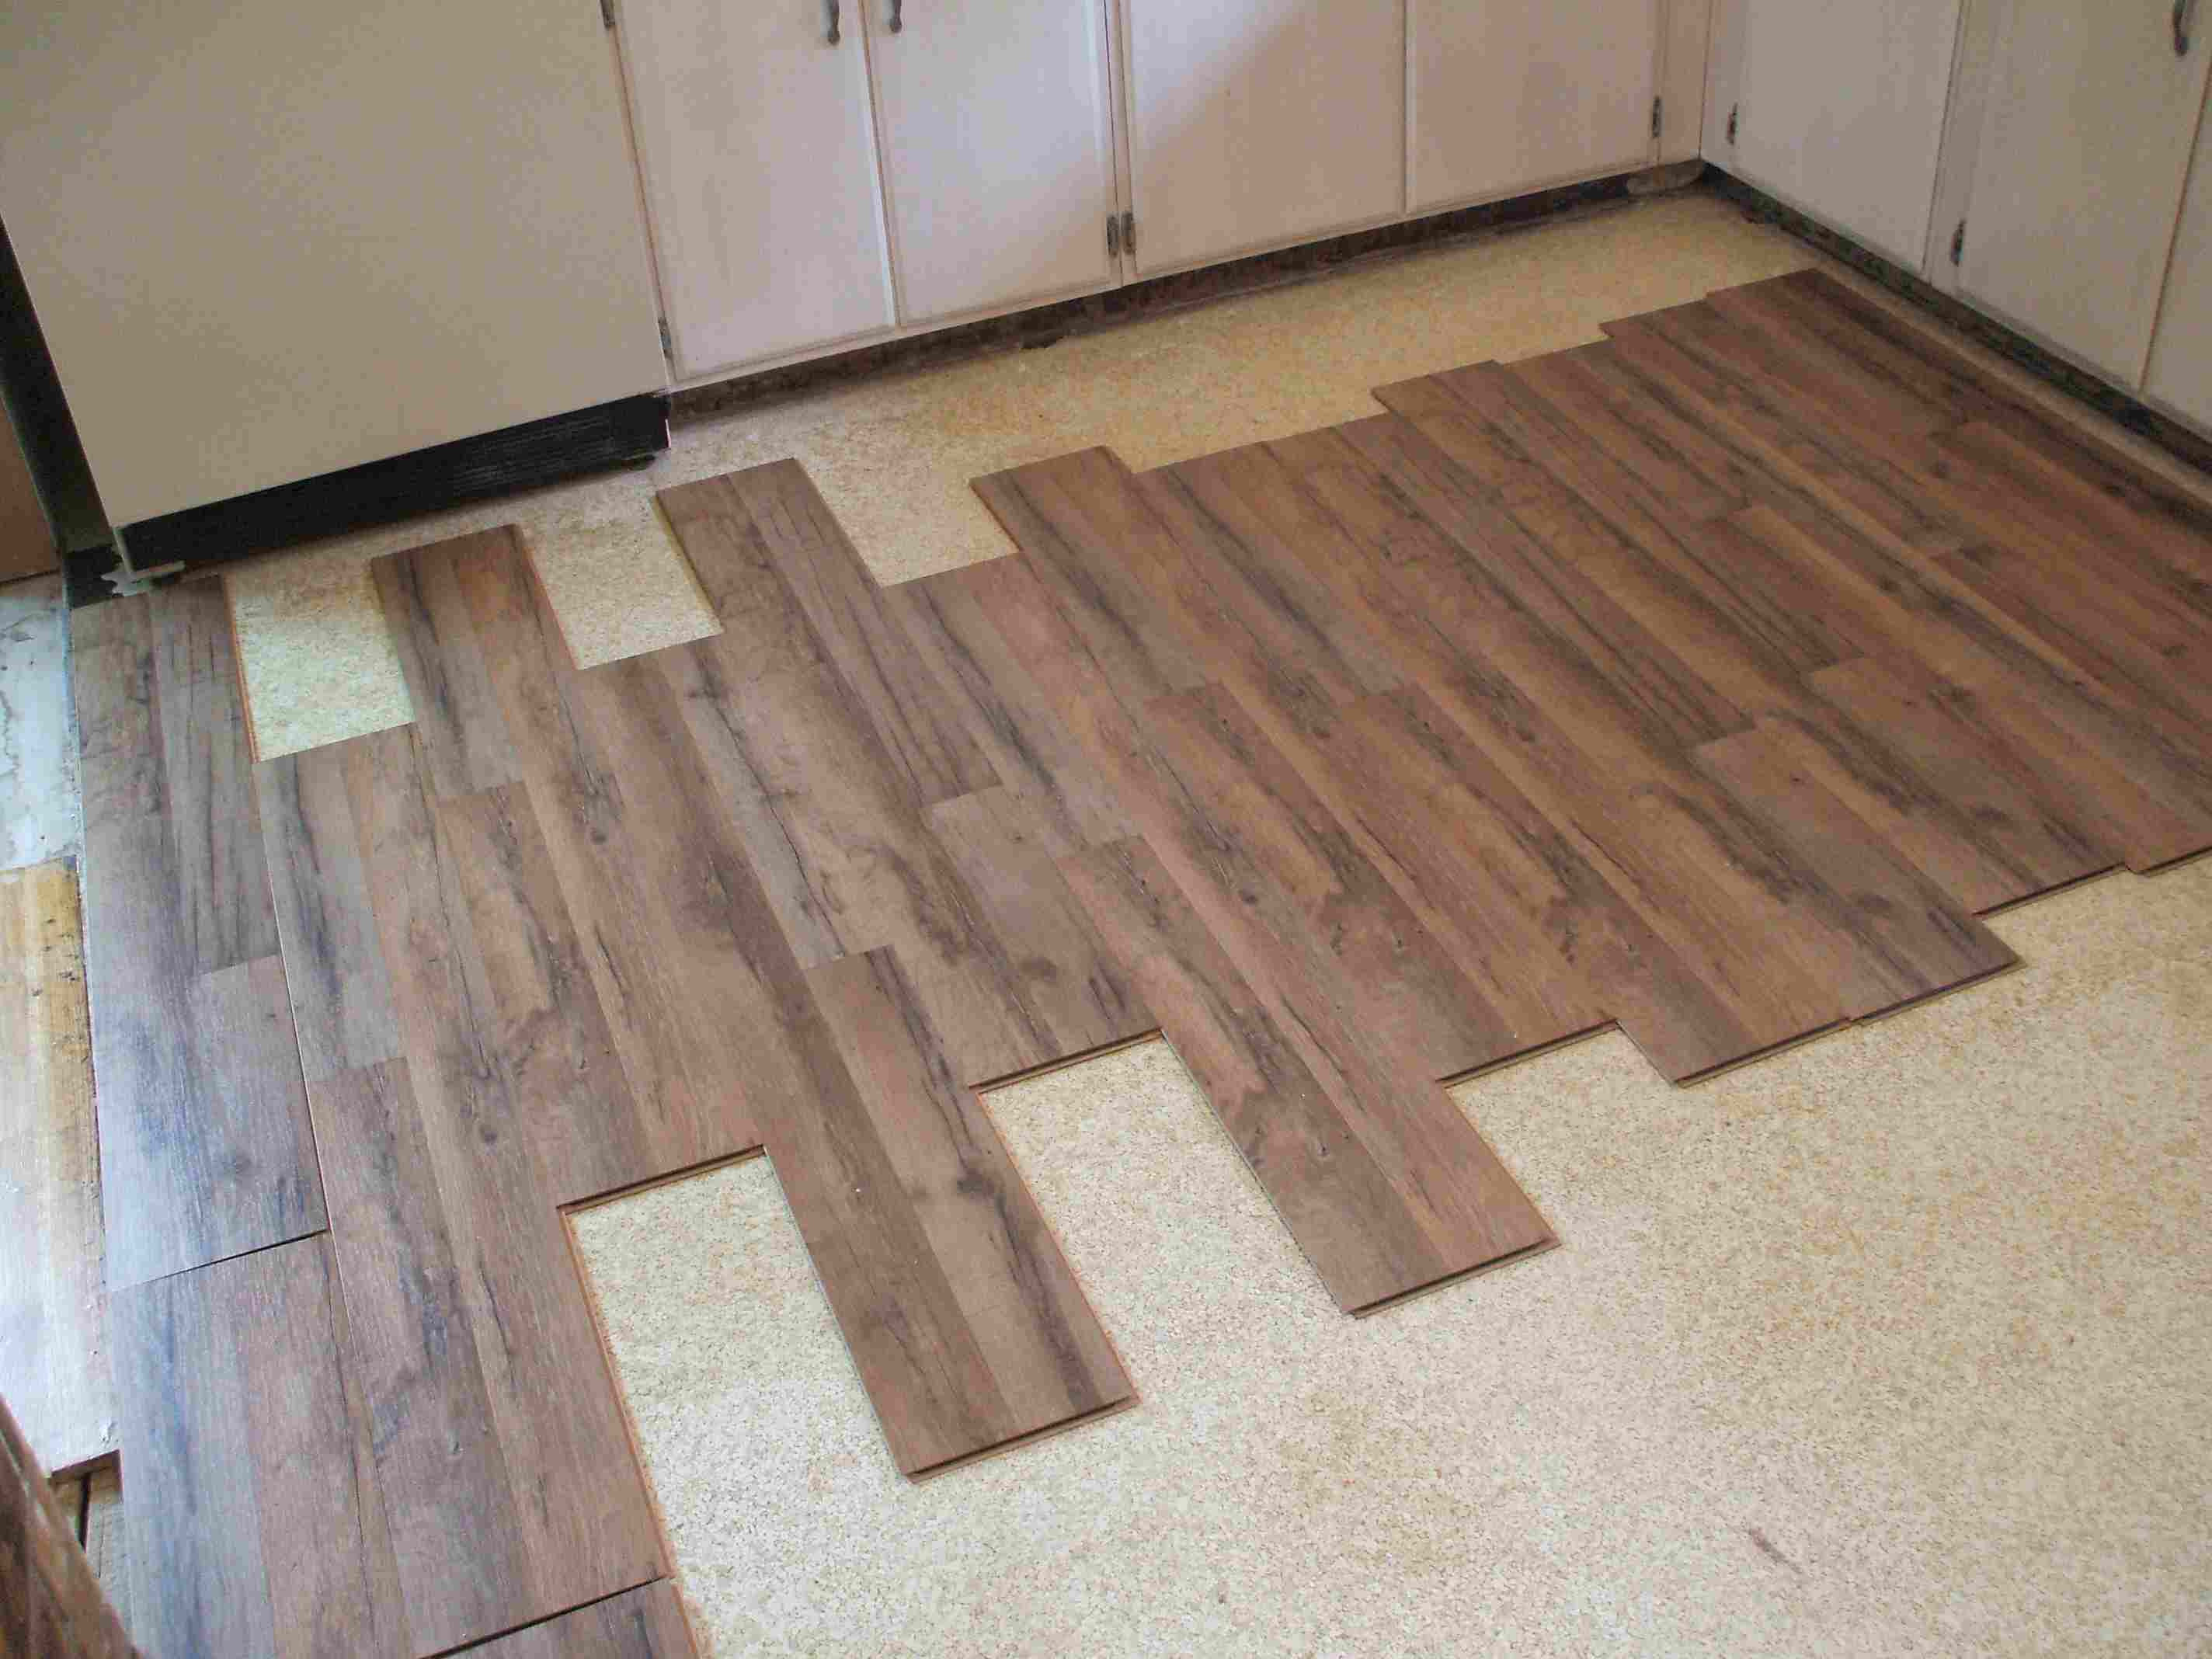 hardwood floor transition to carpet of laminate flooring installation made easy for installing laminate eyeballing layout 56a49d075f9b58b7d0d7d693 jpg